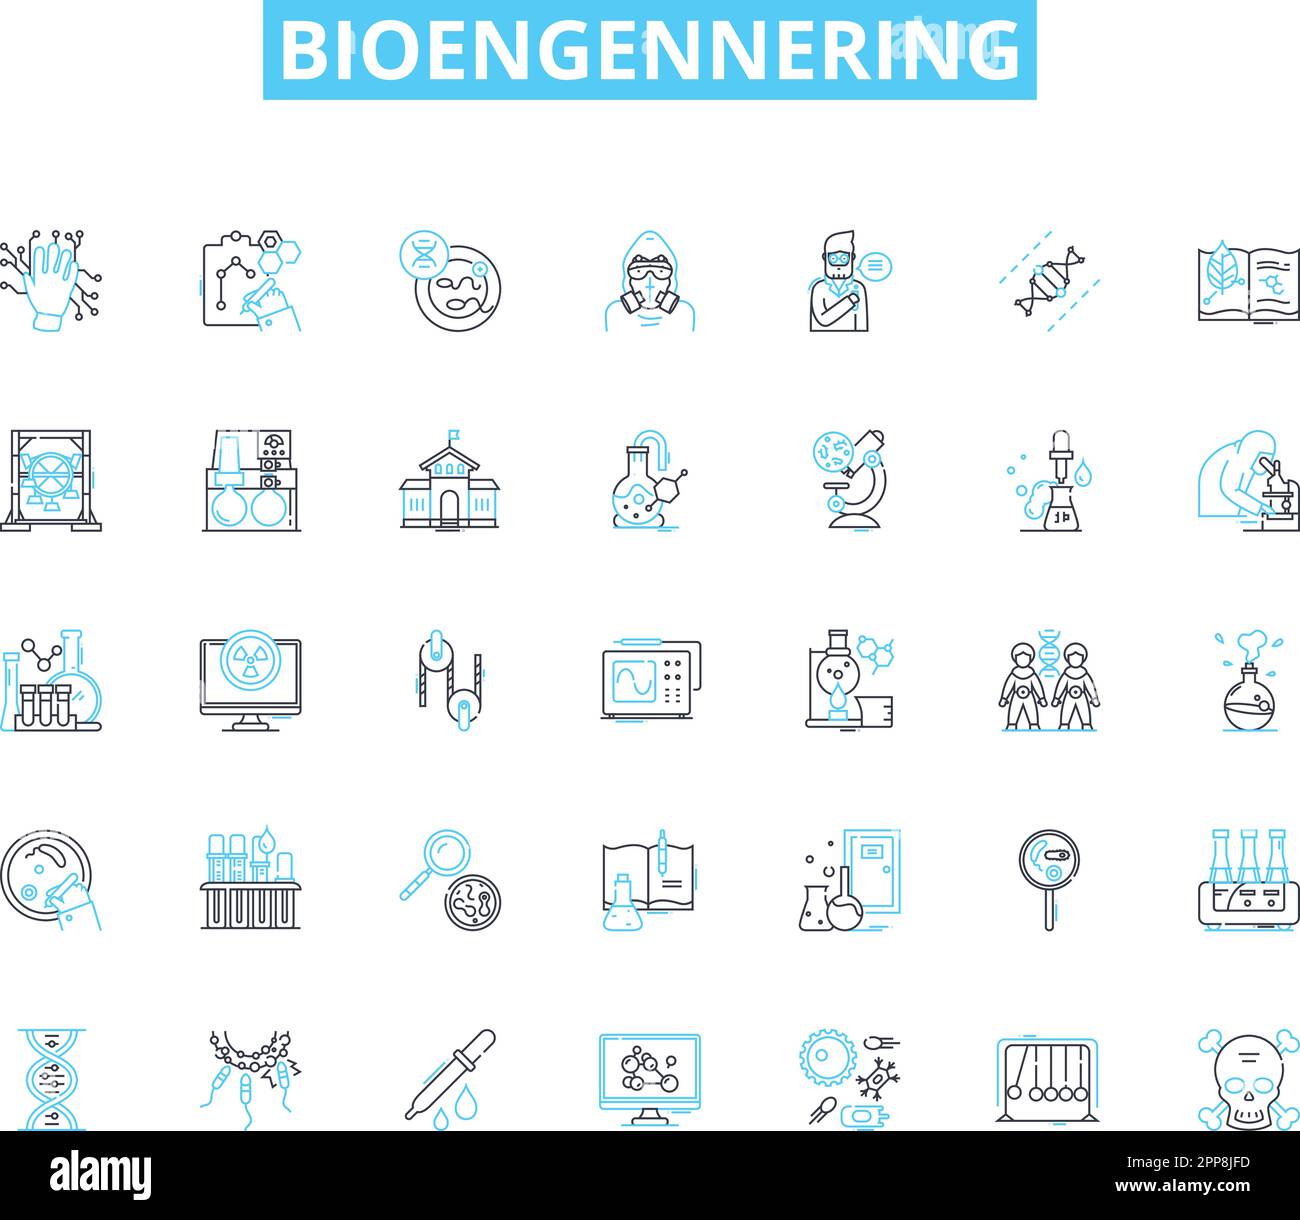 Bioengennering linear icons set. Biomaterials, Biomechanics, Bioprocessing, Bioreactors, Nanotechnology, Tissue engineering, Biocompatibility line Stock Vector